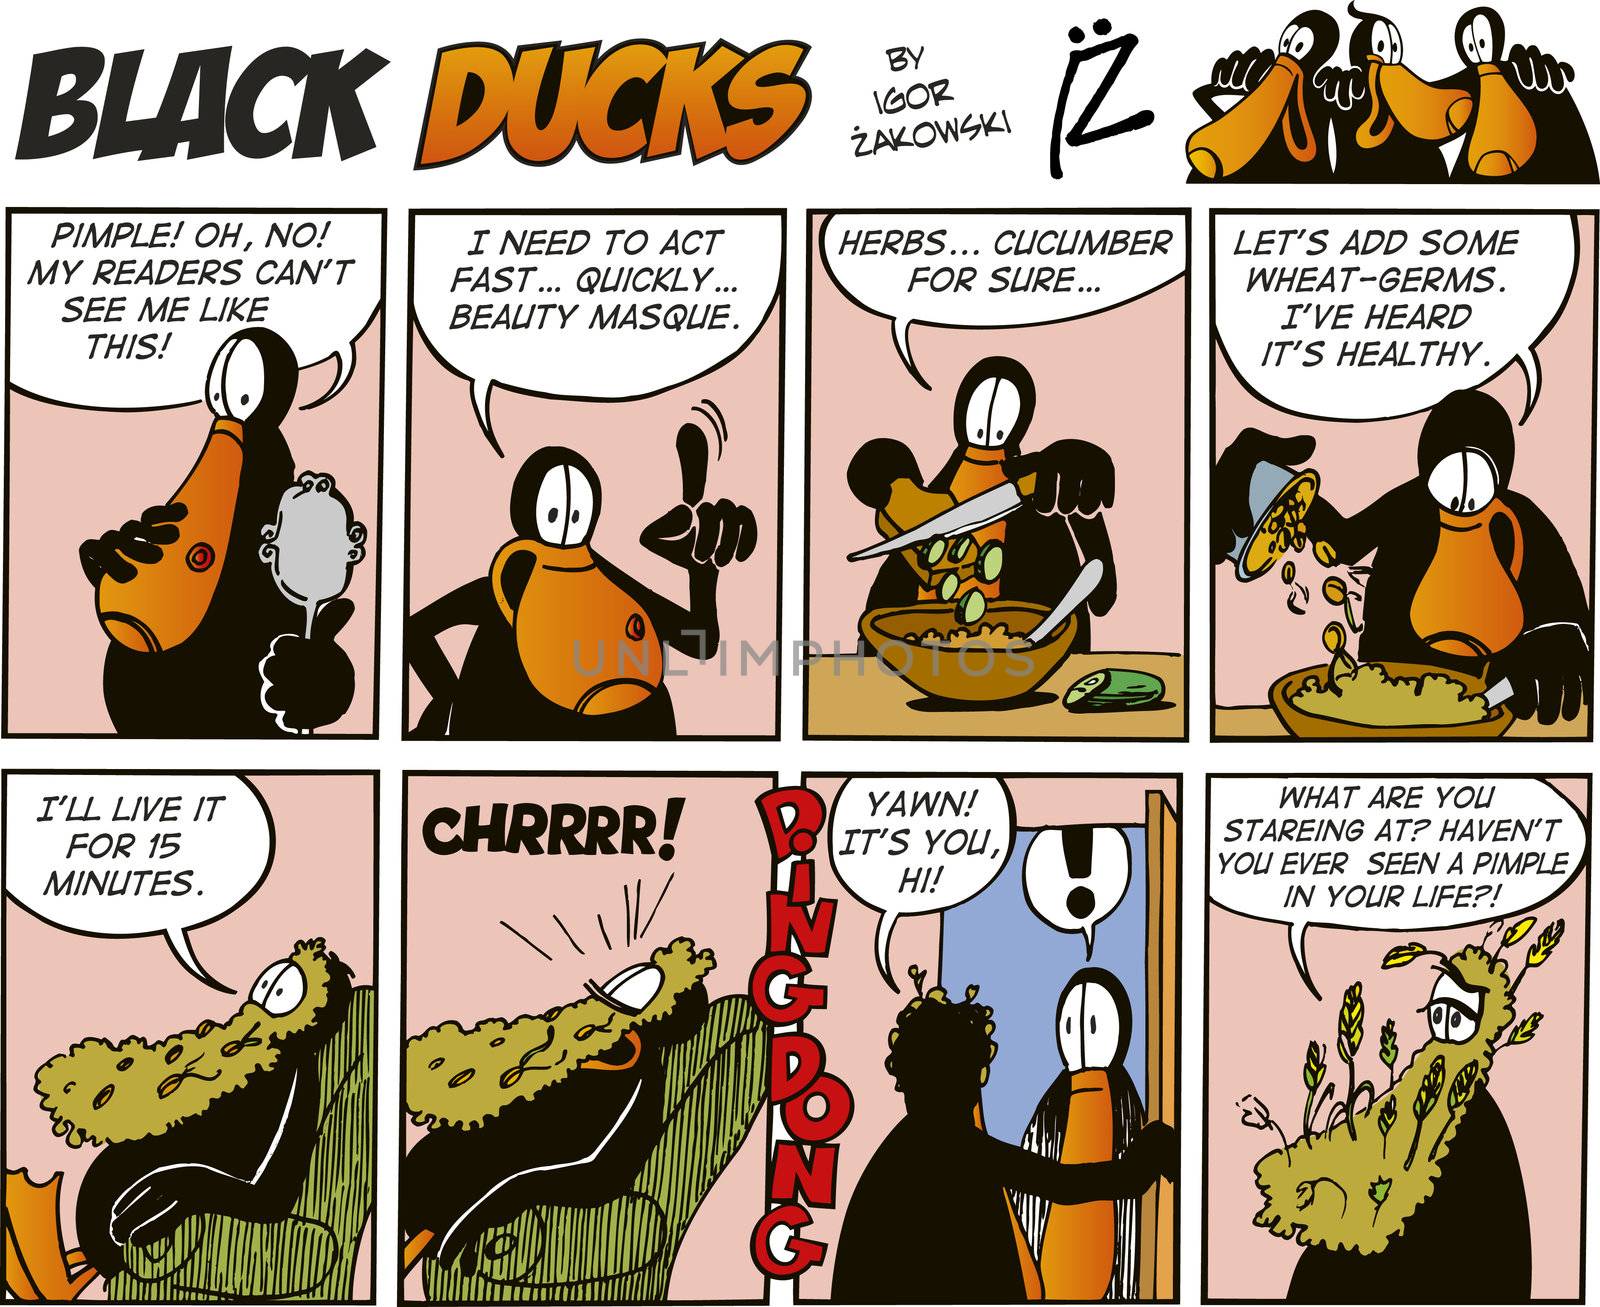 Black Ducks Comic Strip episode 37